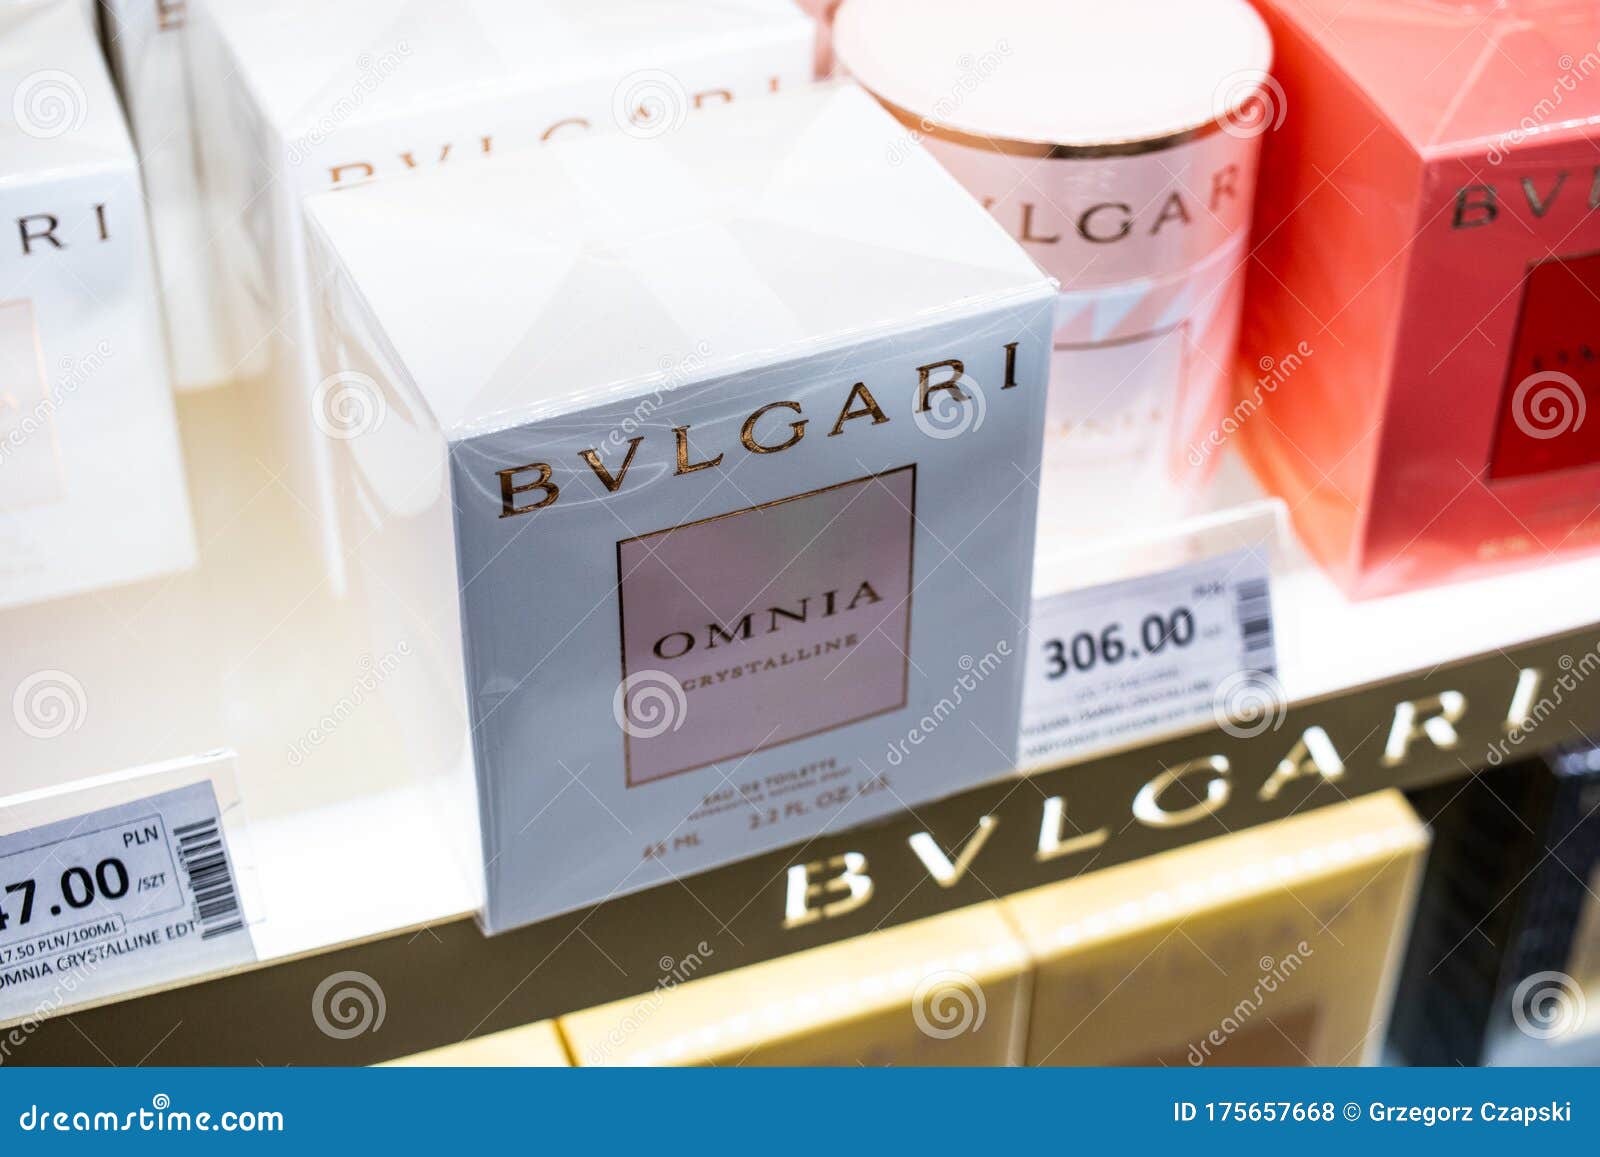 bvlgari perfume shop